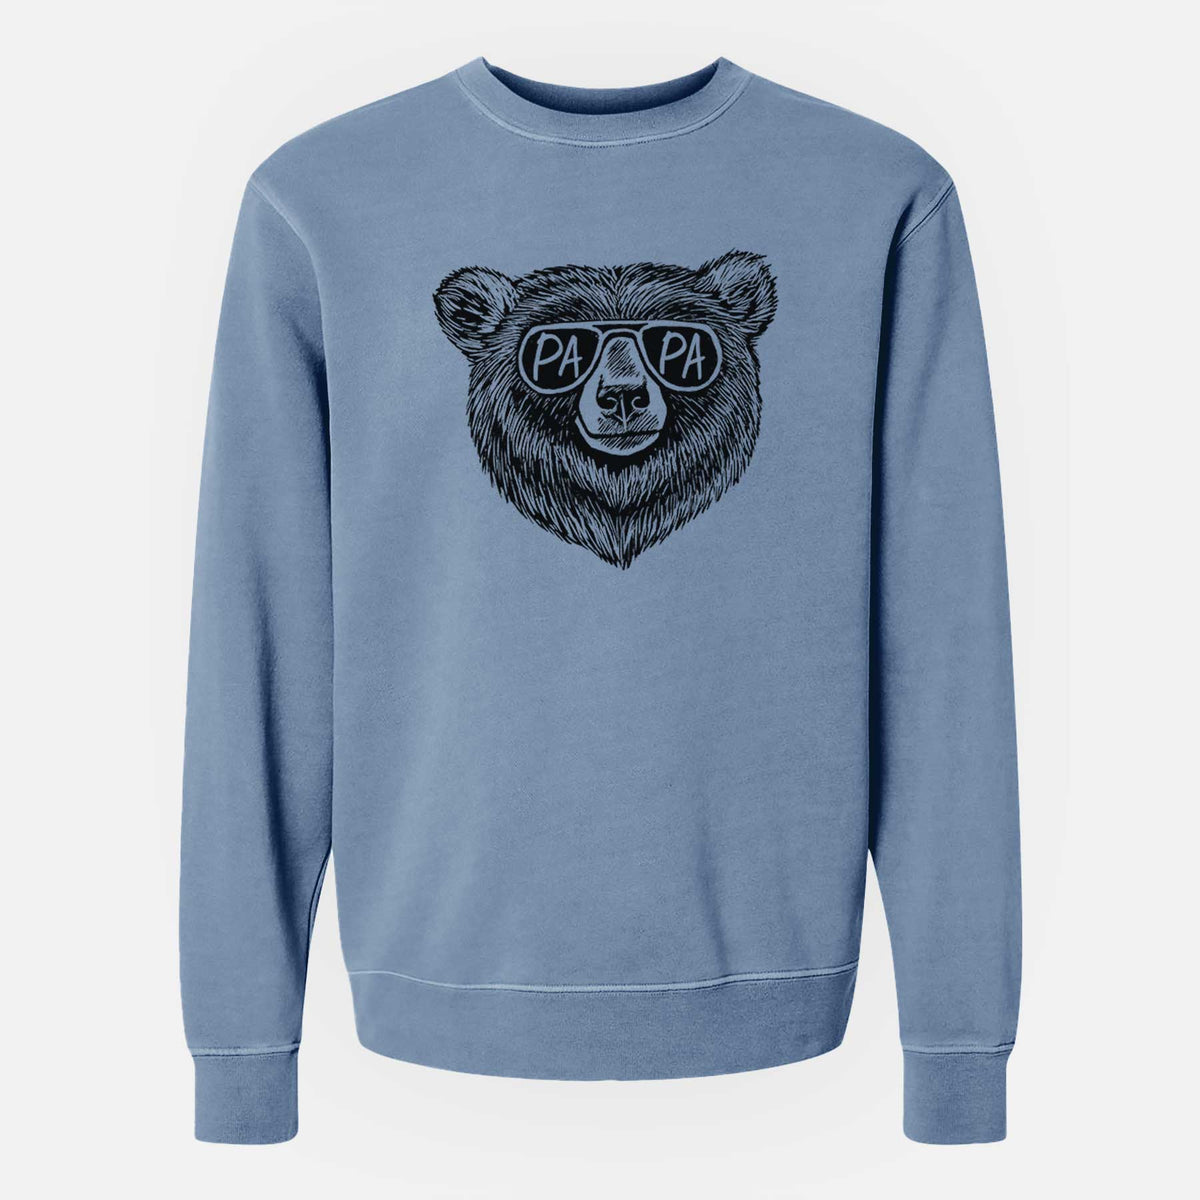 Papa Bear - Papa Glasses - Unisex Pigment Dyed Crew Sweatshirt